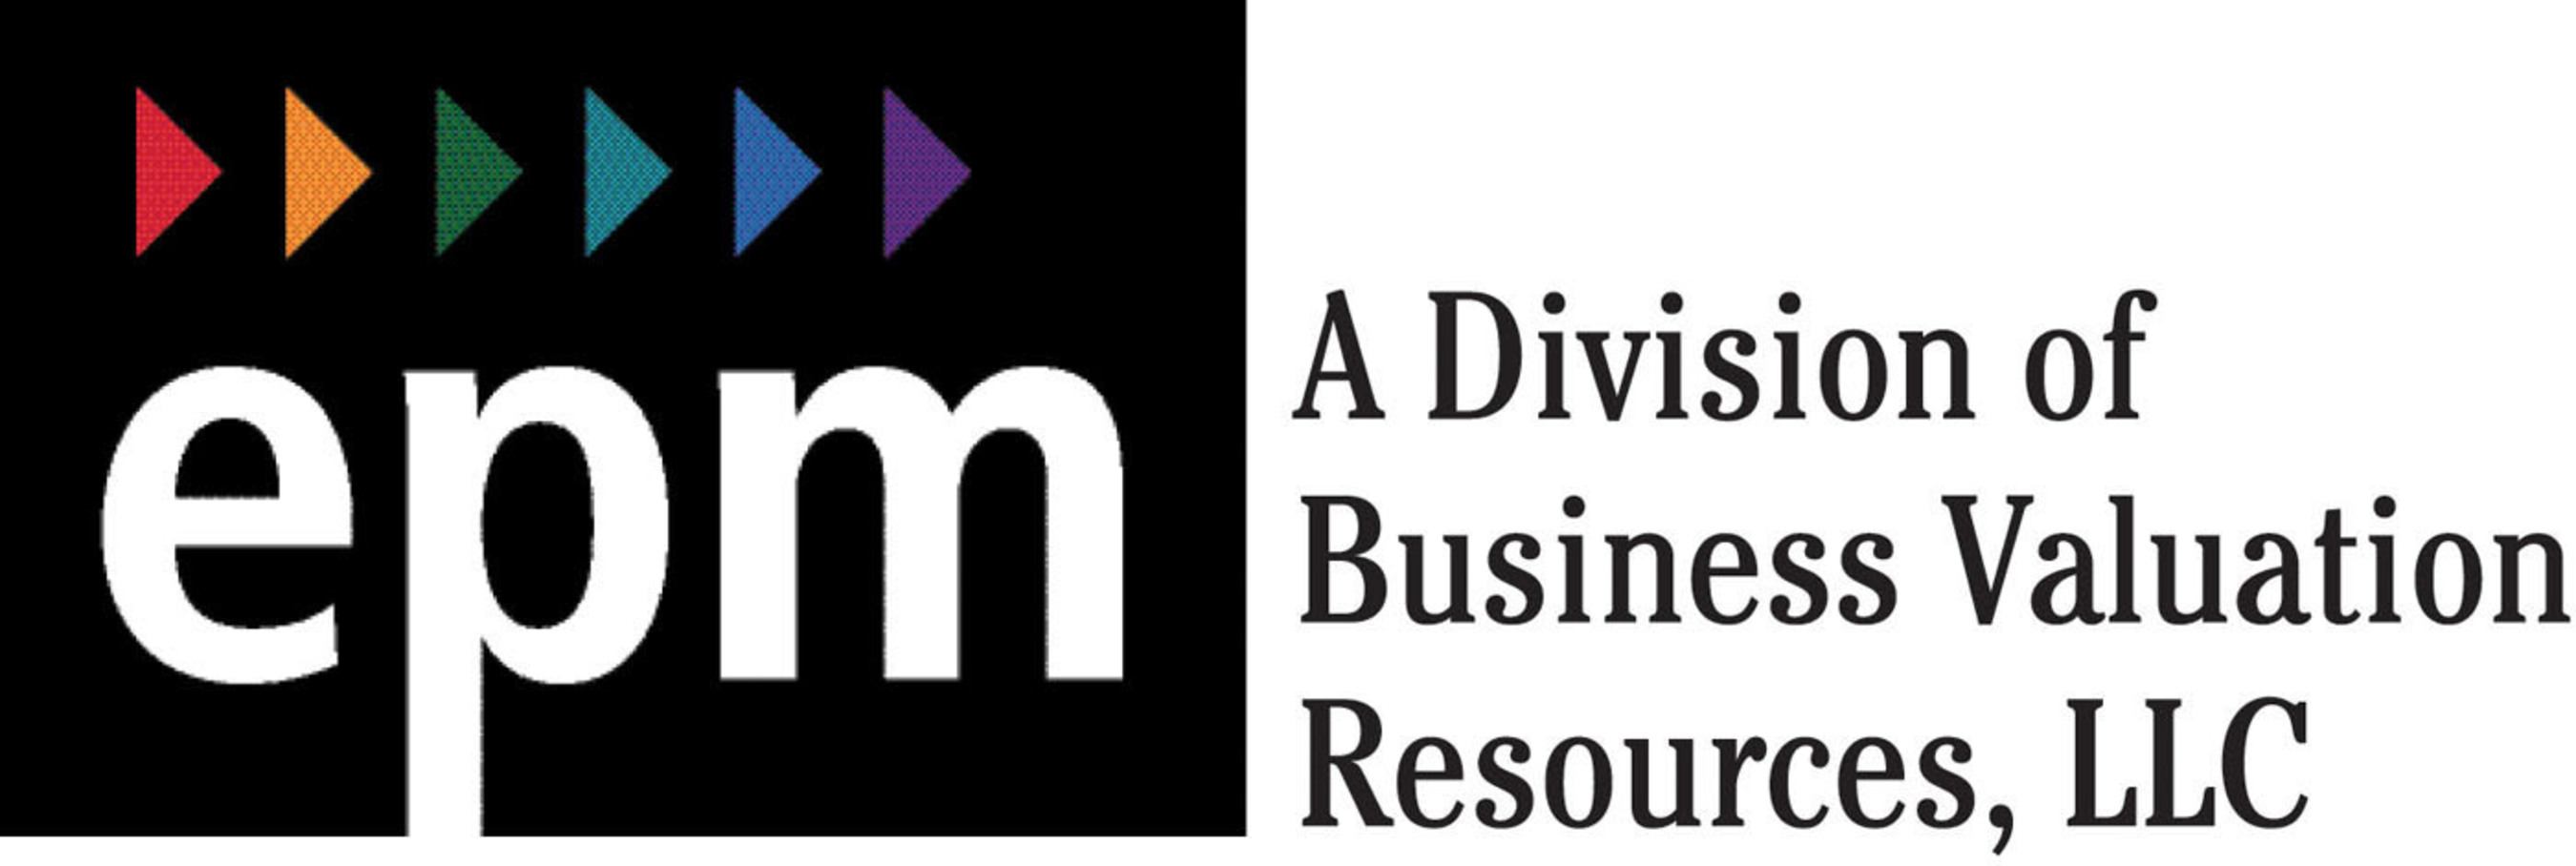 EPM - A Division of Business Valuation Resources, LLC. (PRNewsFoto/BVR) (PRNewsFoto/BVR)